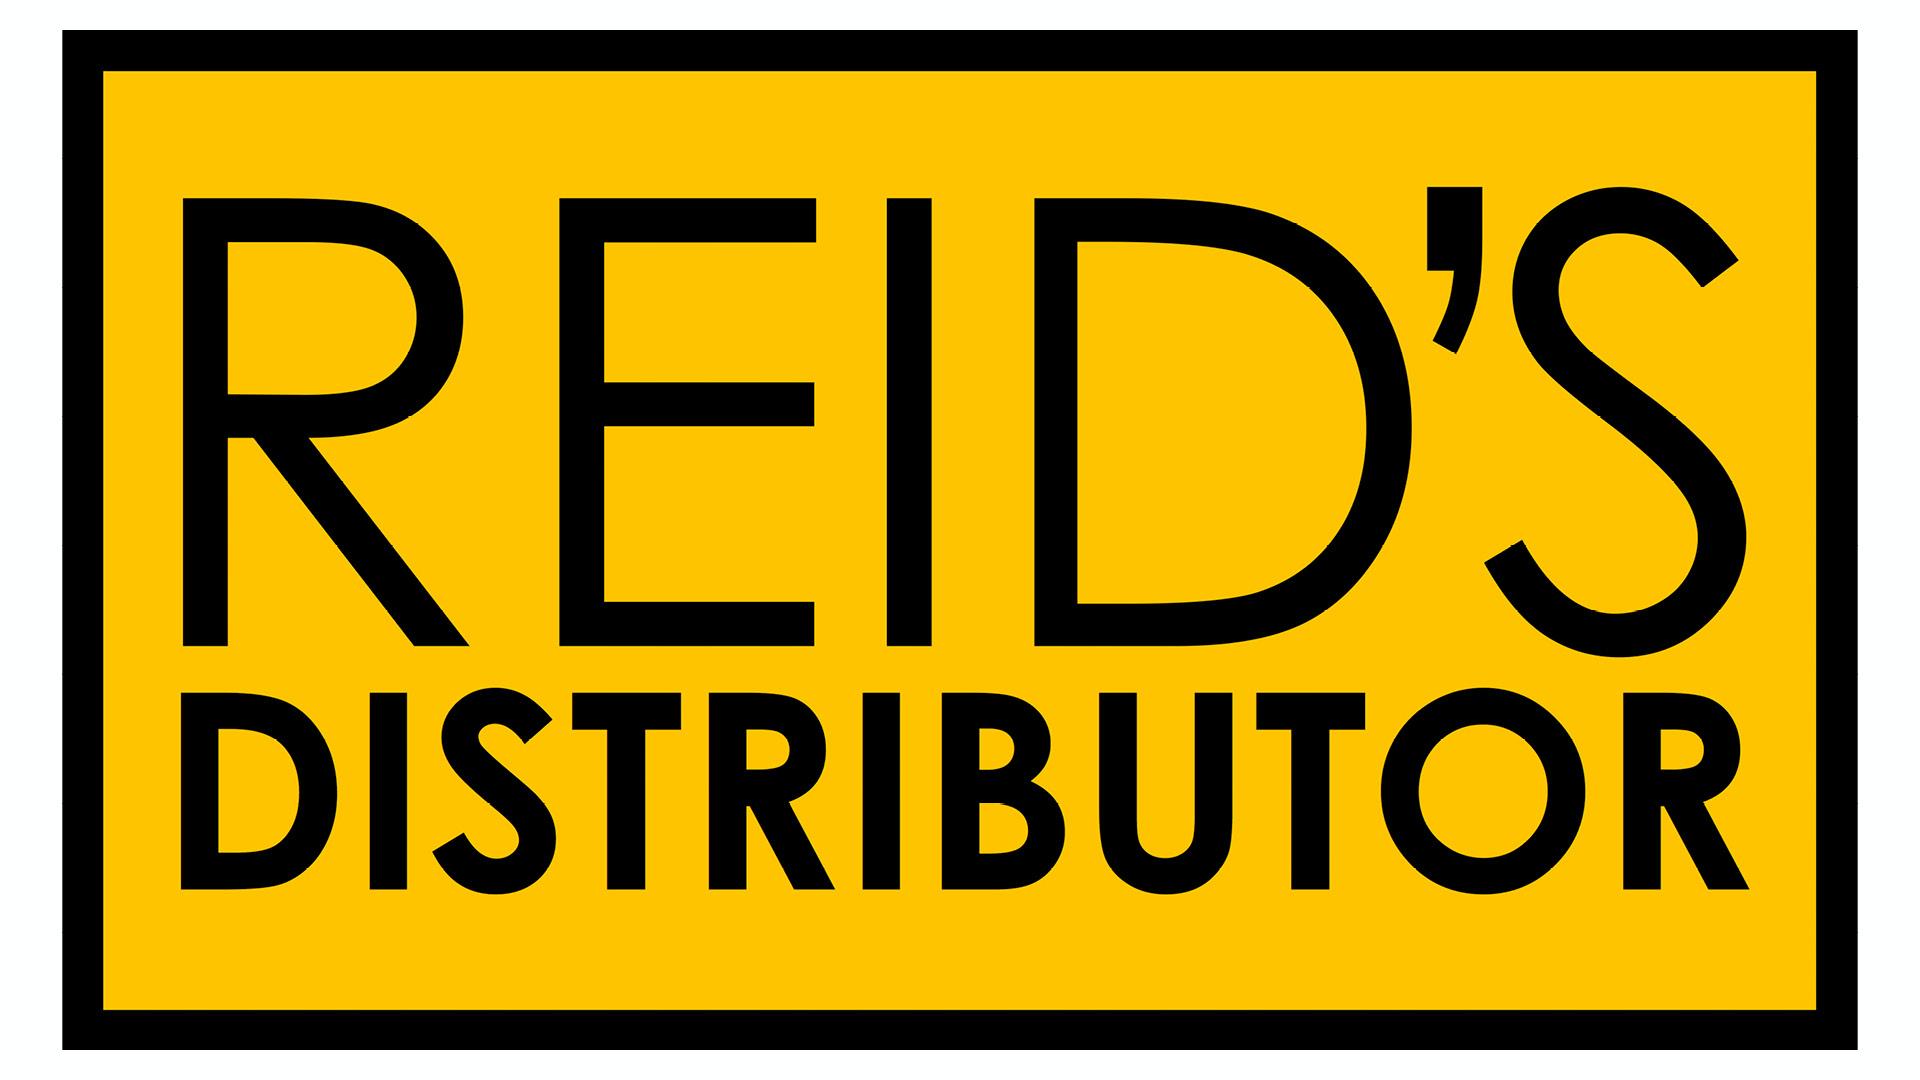 Reid's Distributor